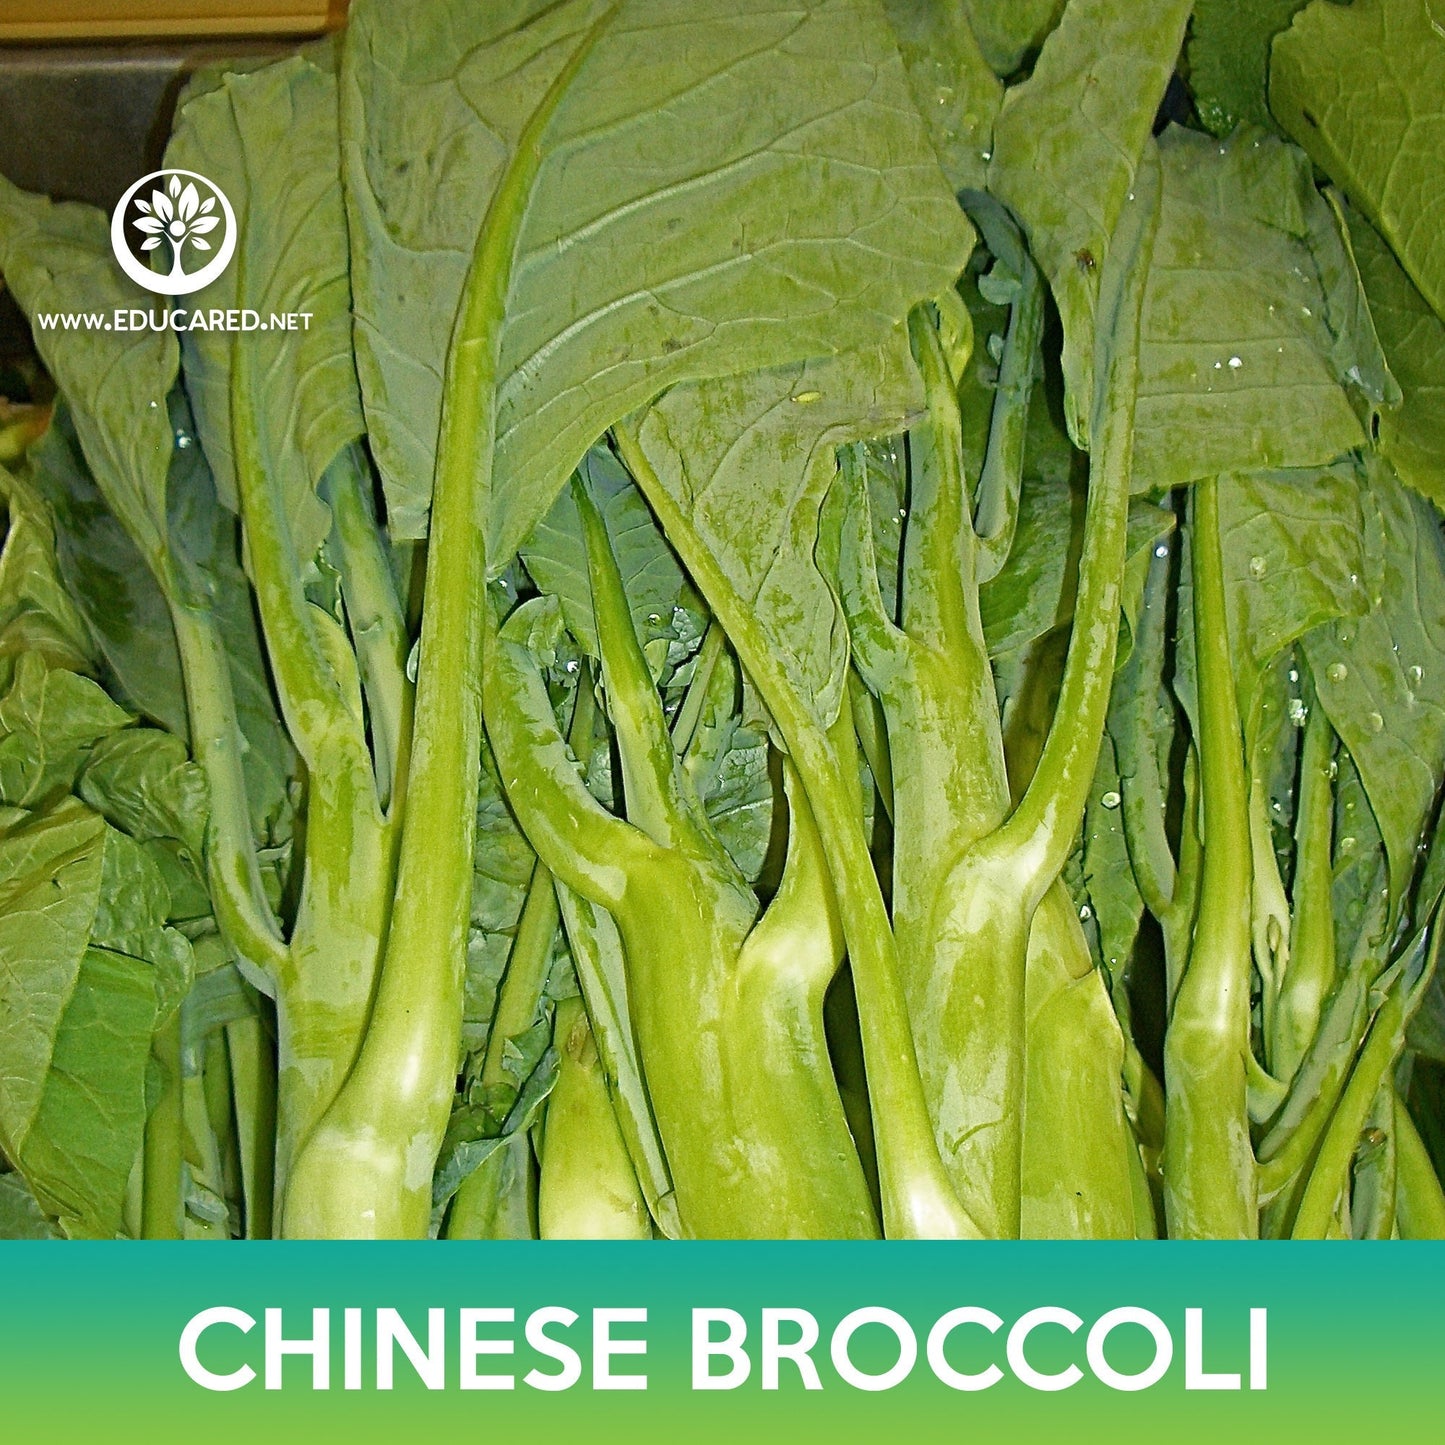 Chinese Broccoli Seeds, Chinese kale, Brassica oleracea var. alboglabra